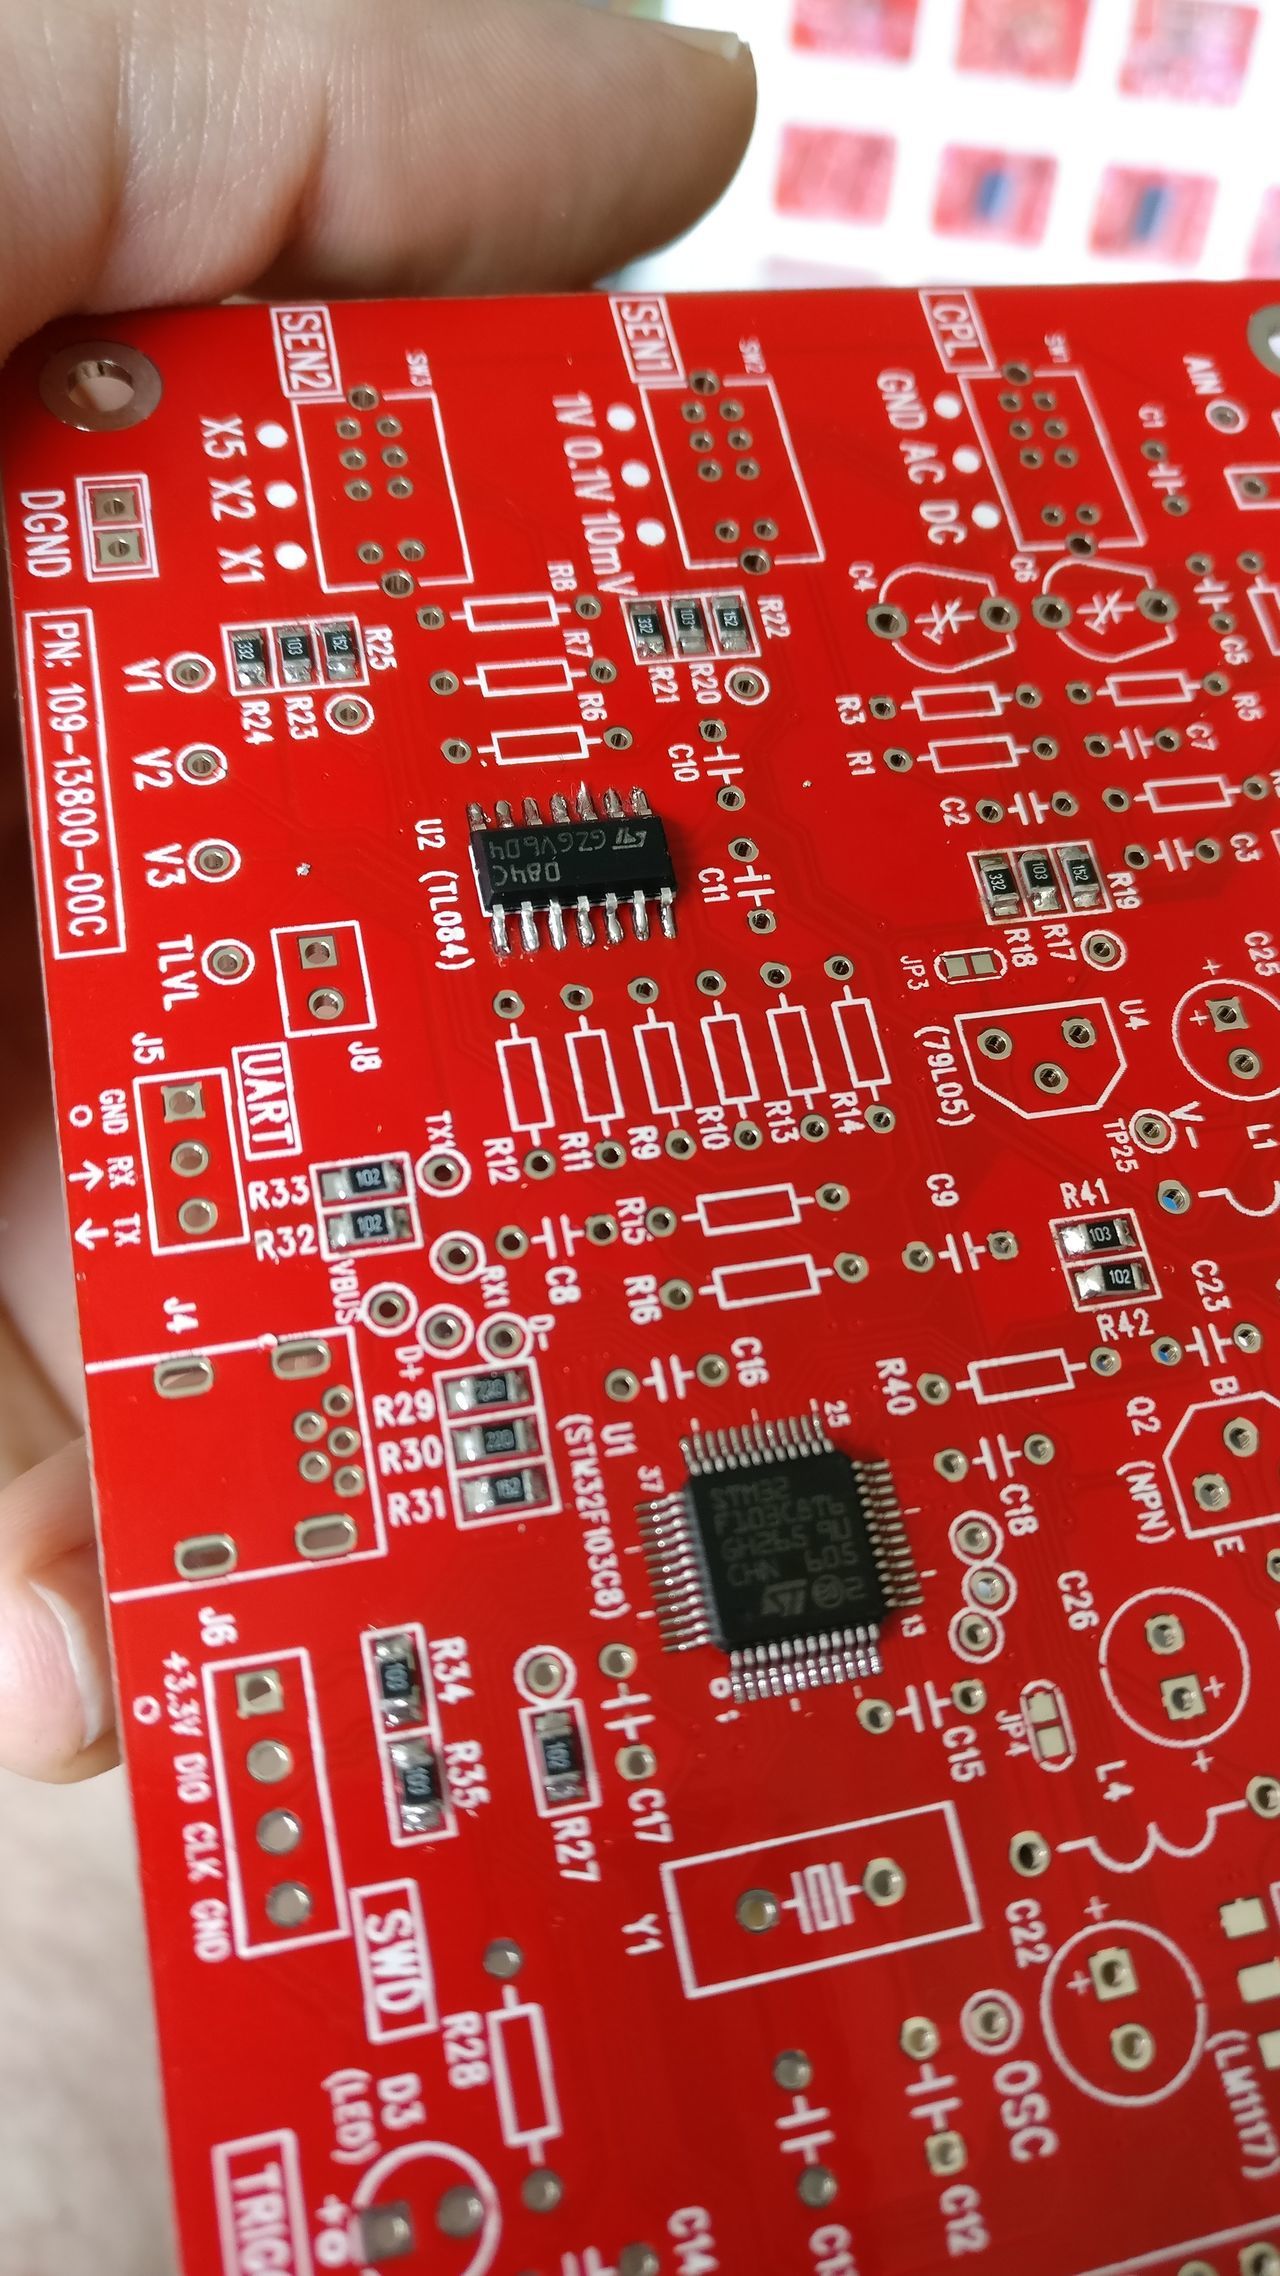 DSO138: U2 chip soldering